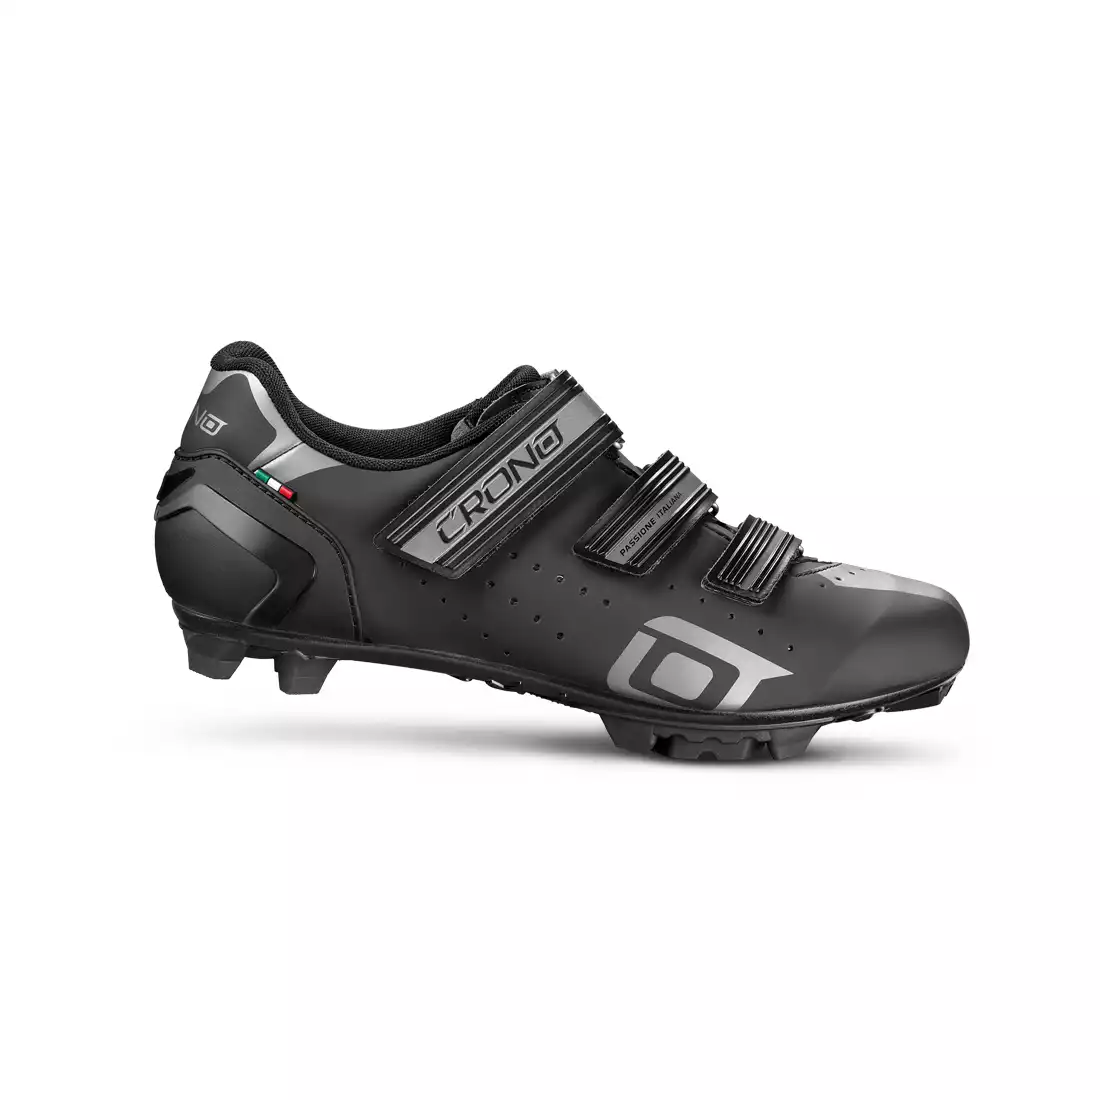 CRONO MTB CX-4-22 Cycling shoes MTB, composite, black